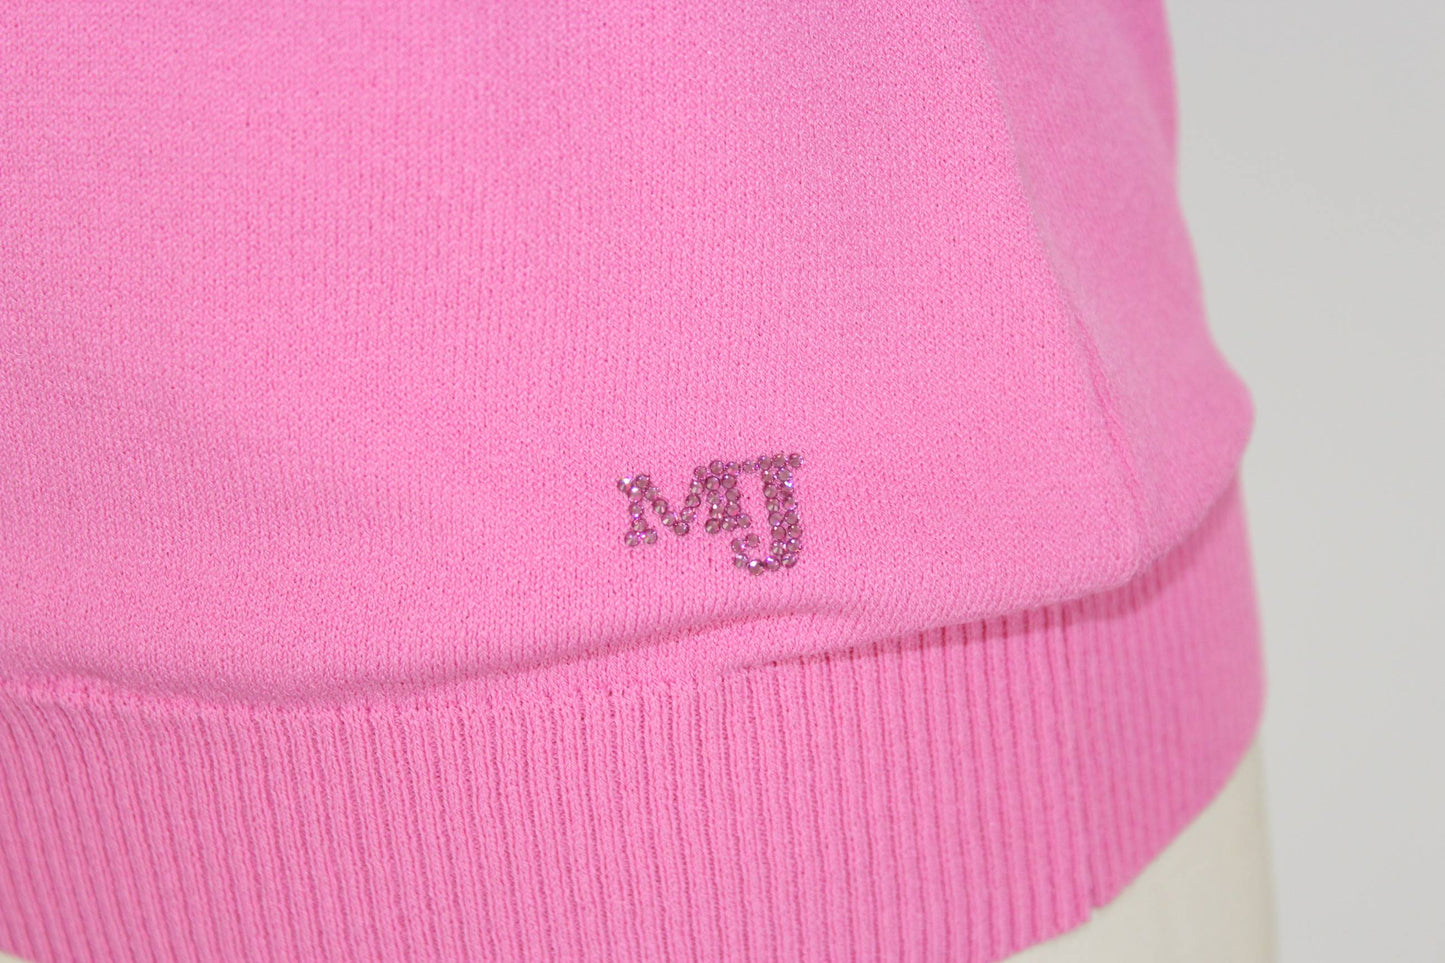 Gai Mattiolo Vintage Pink Beaded Evening Top Shirt